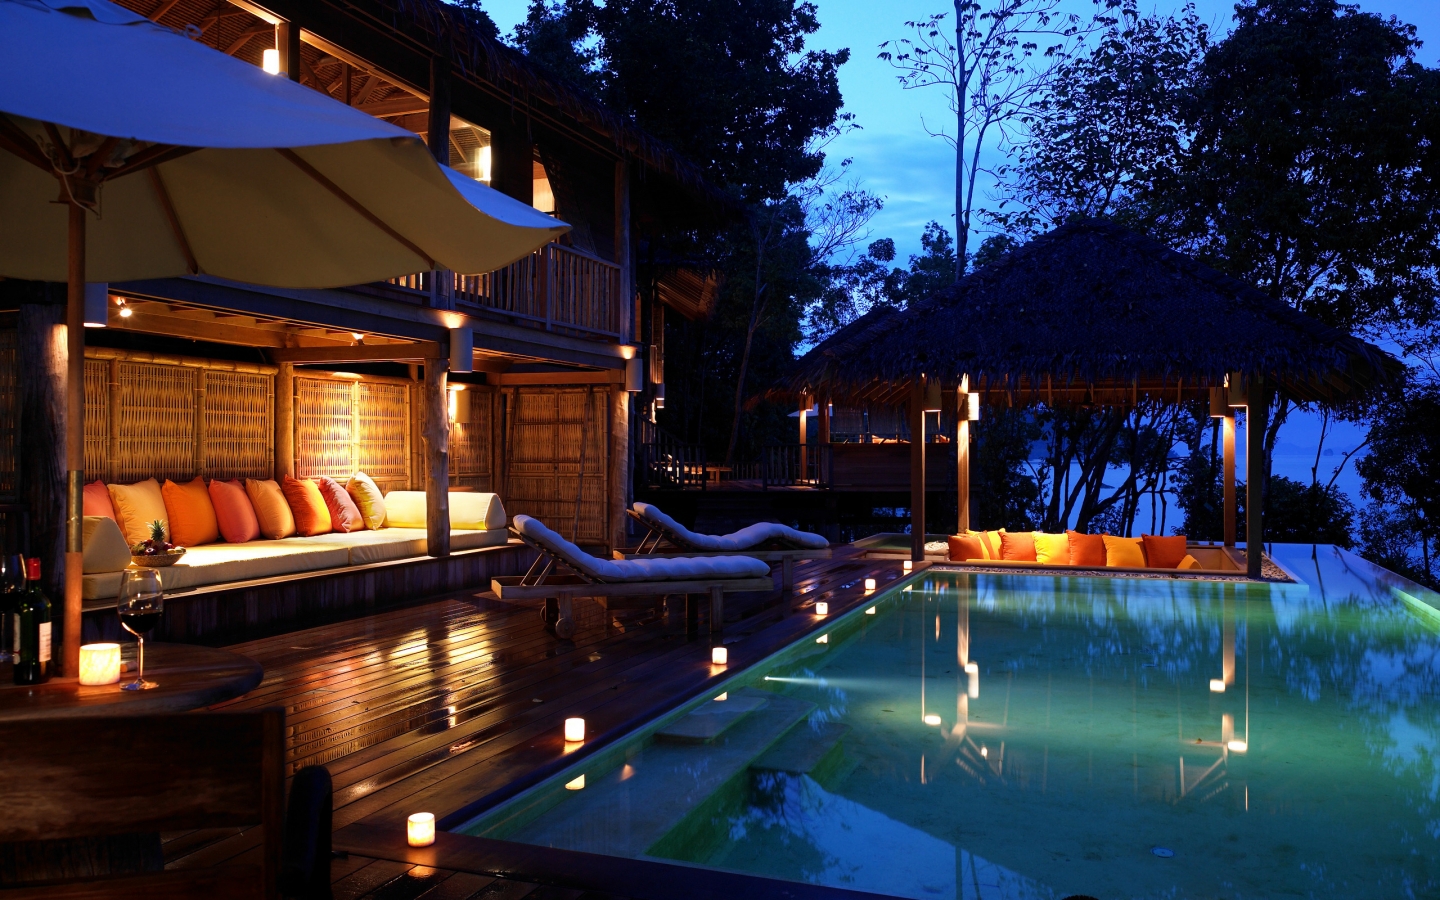 Luxury Sea Resort for 1440 x 900 widescreen resolution